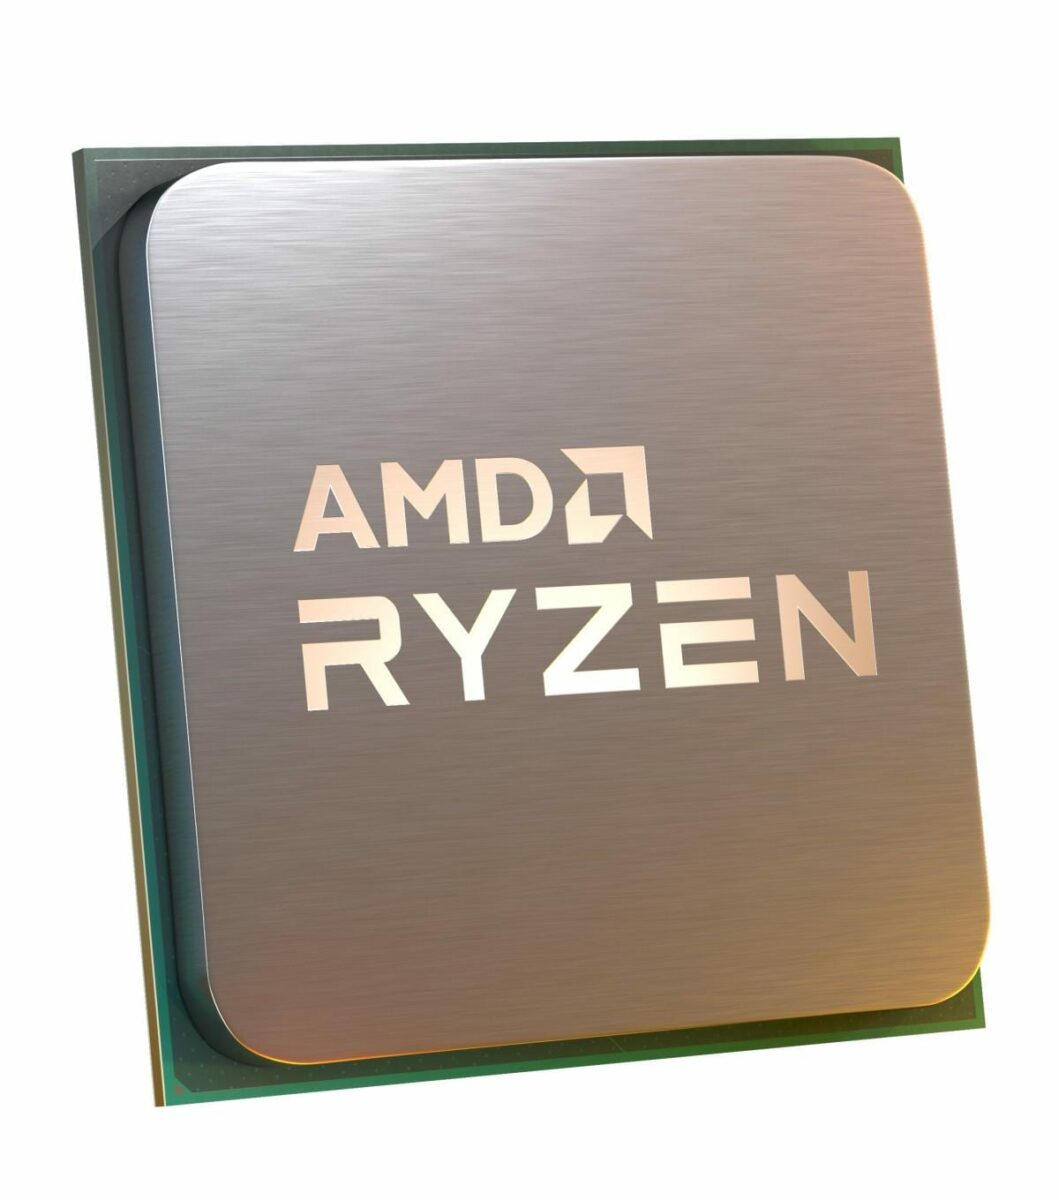 AMD Ryzen chip 1